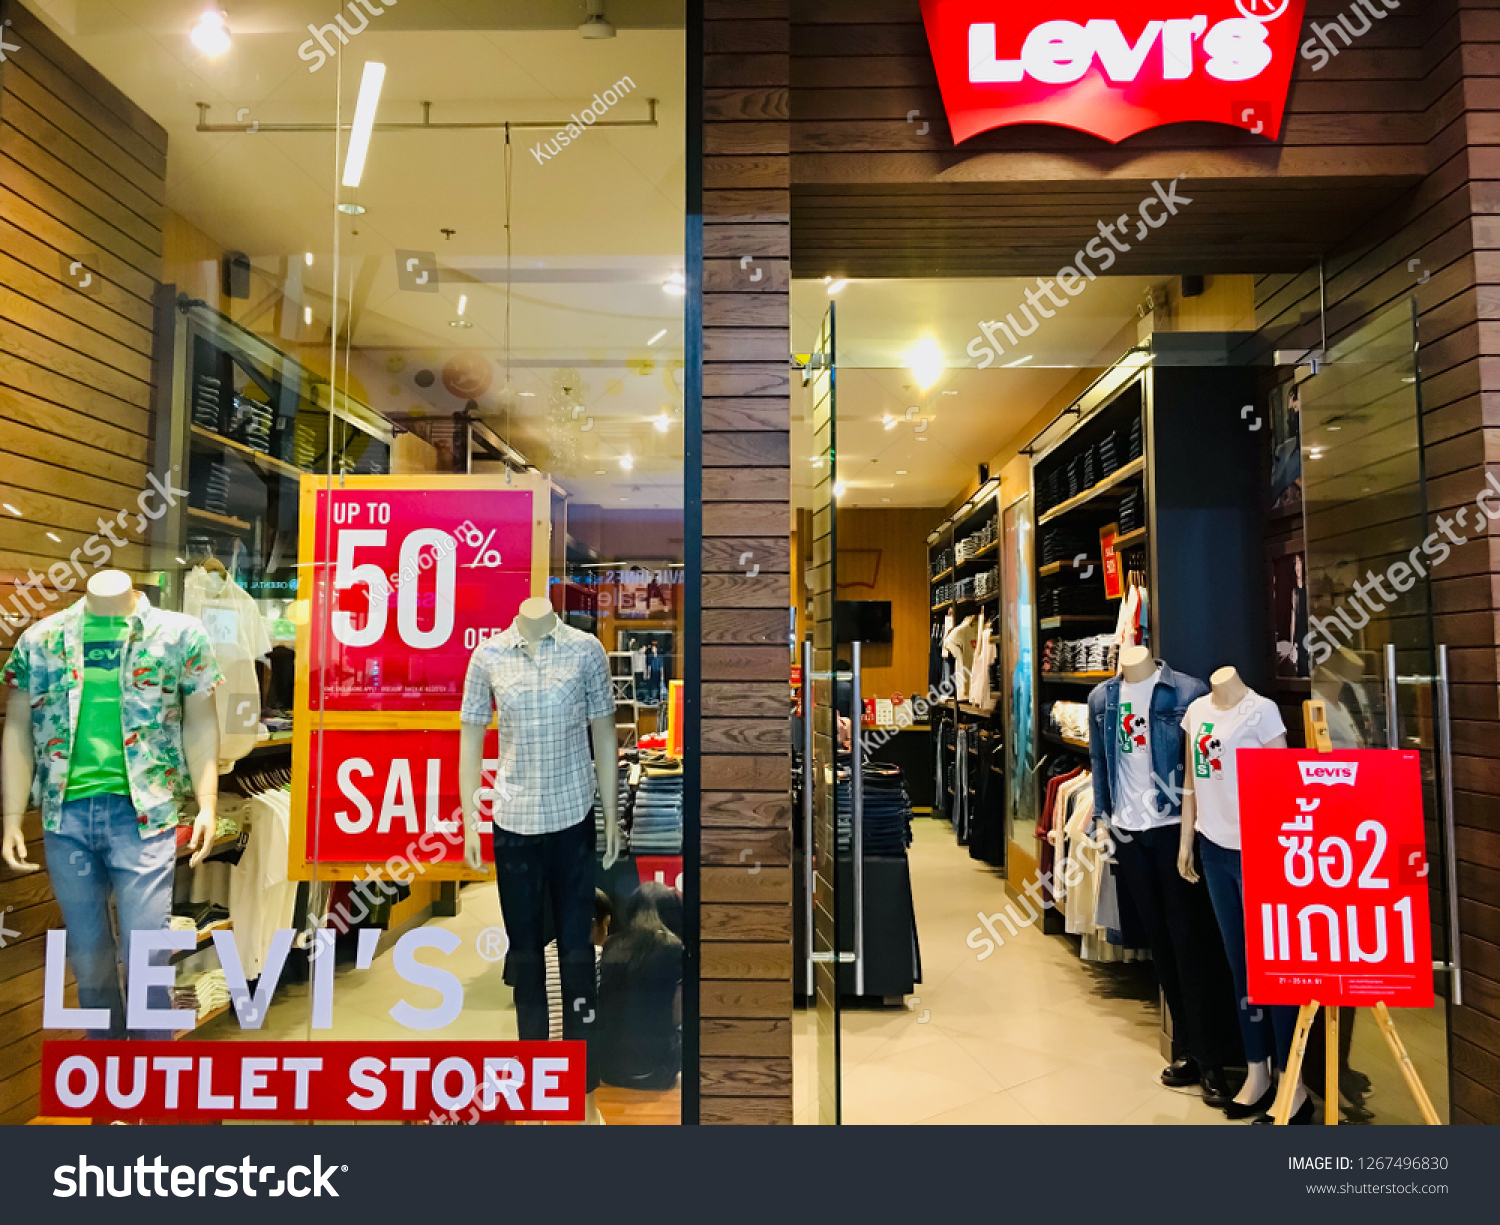 levi's in store sale